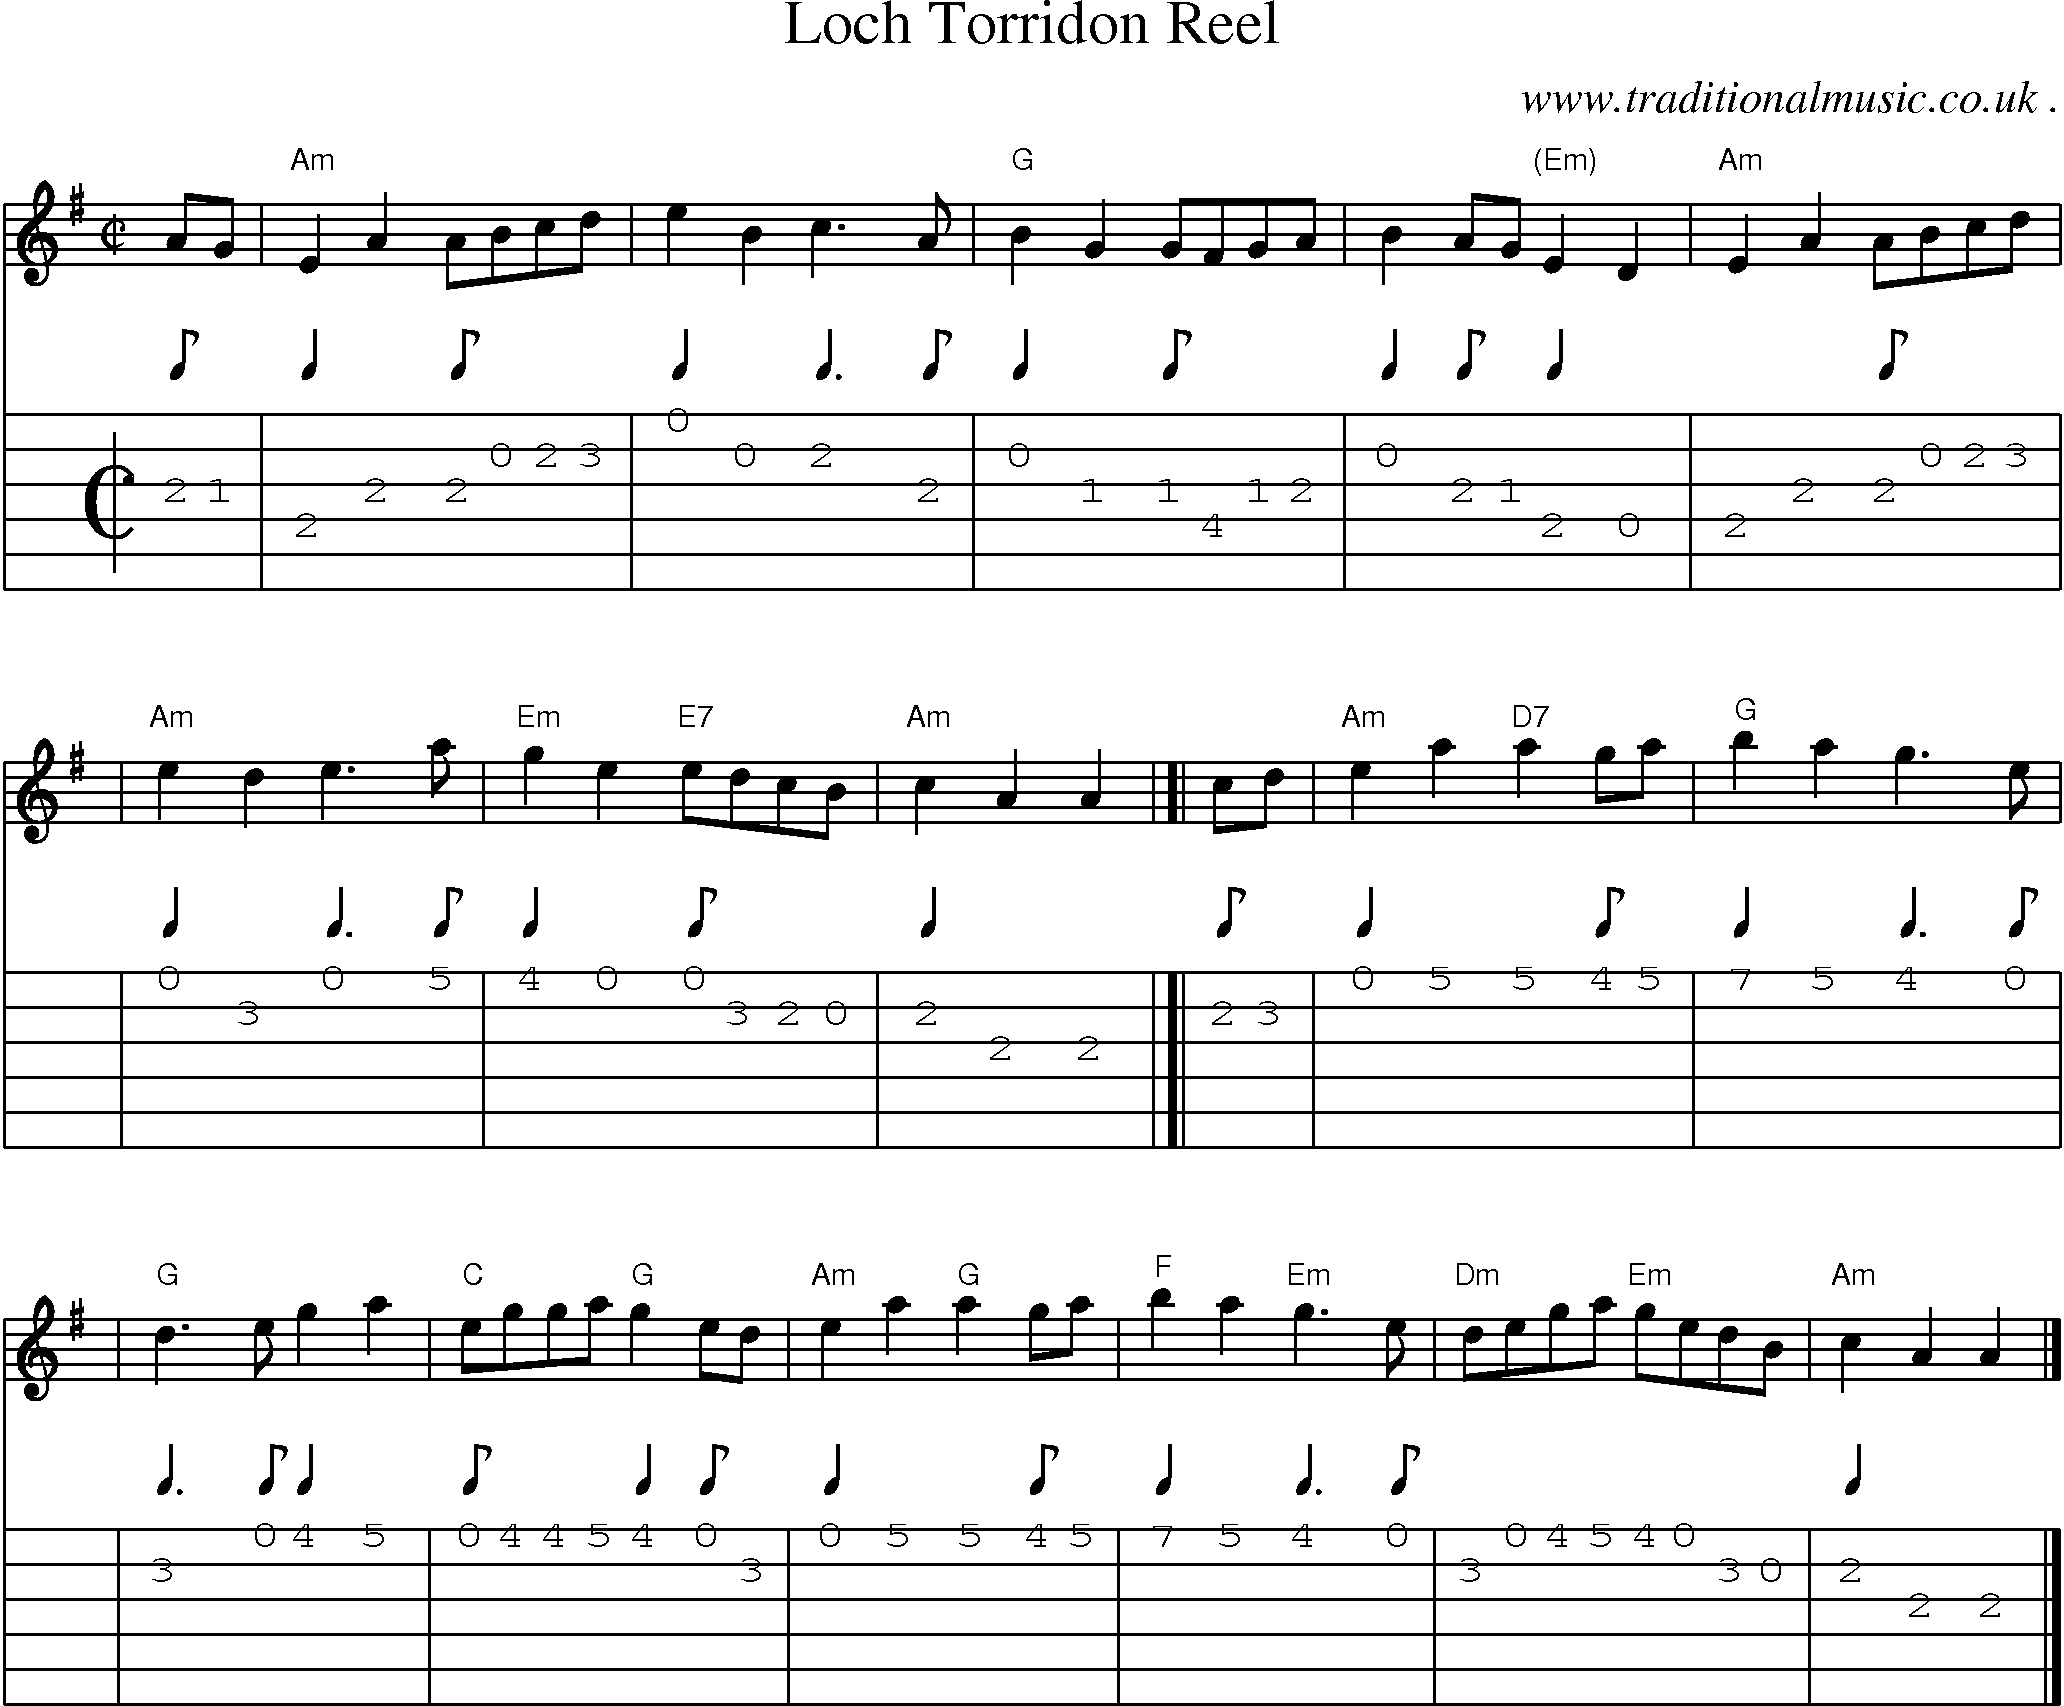 Sheet-music  score, Chords and Guitar Tabs for Loch Torridon Reel